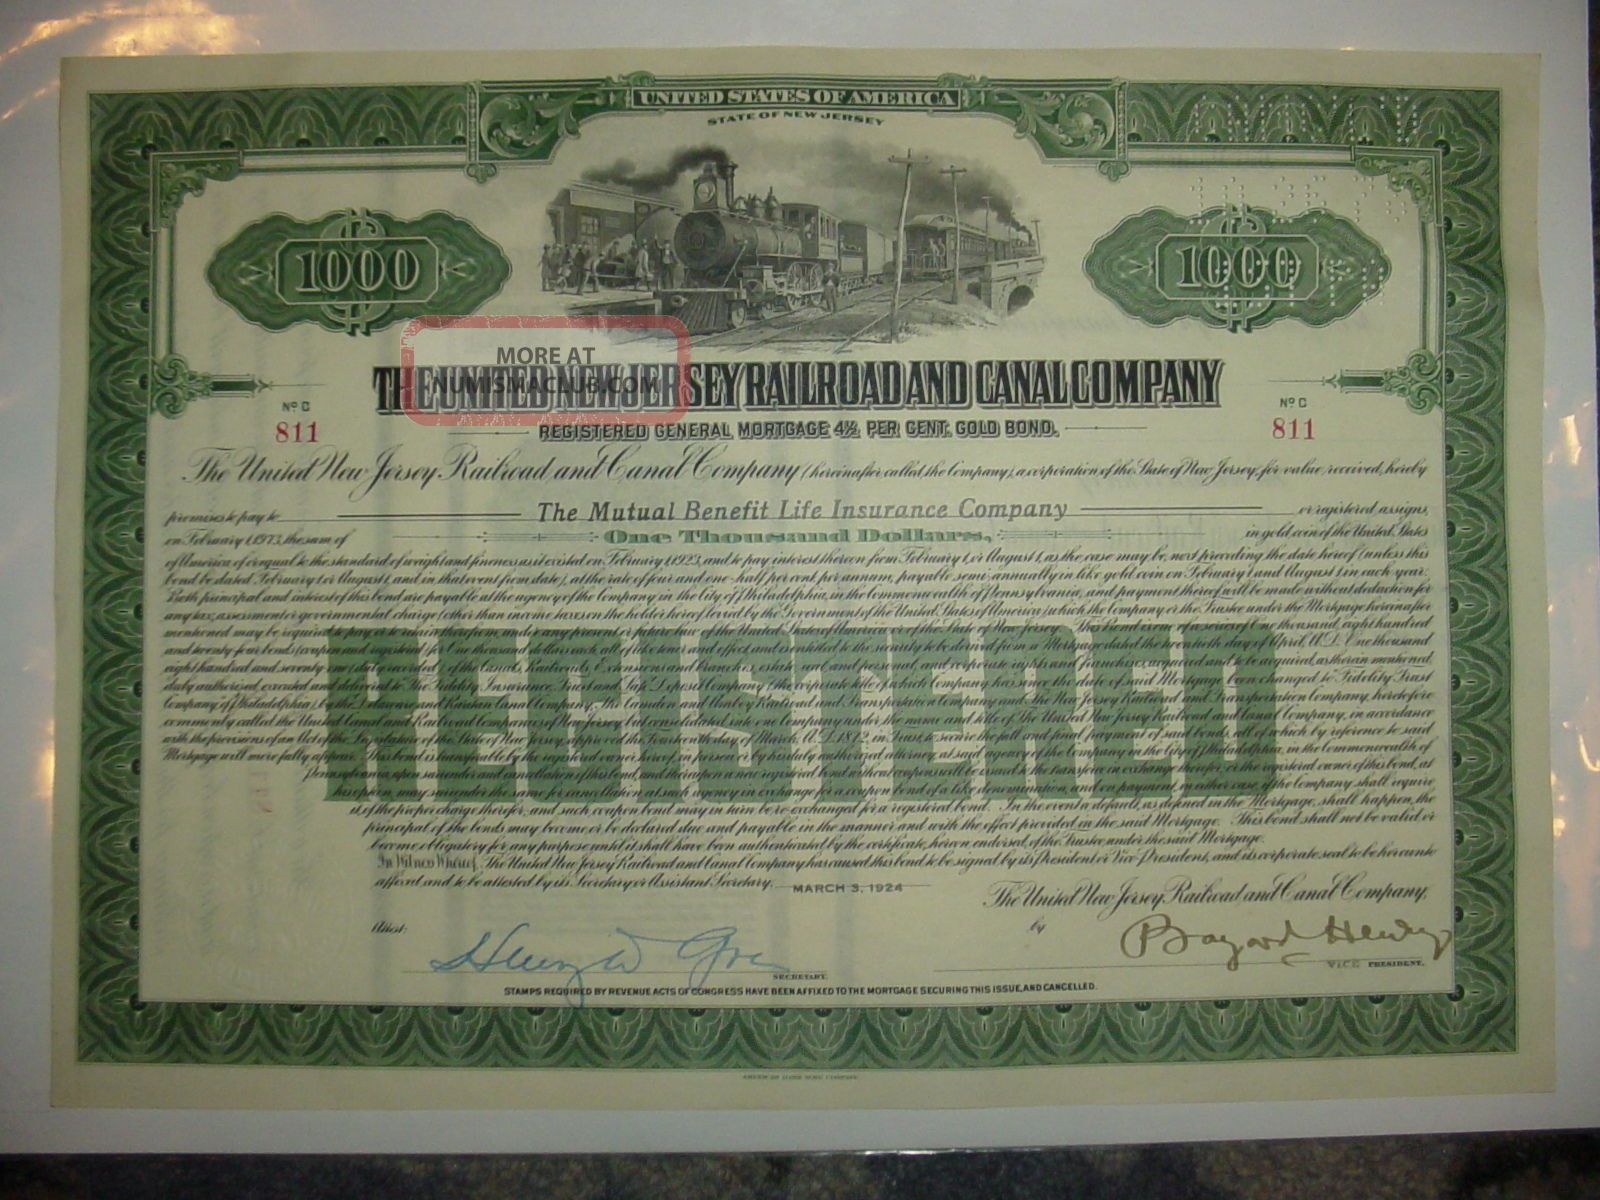 $1, 000 1924 United Jersey Railroad & Canal Company Bond Stock Certificate